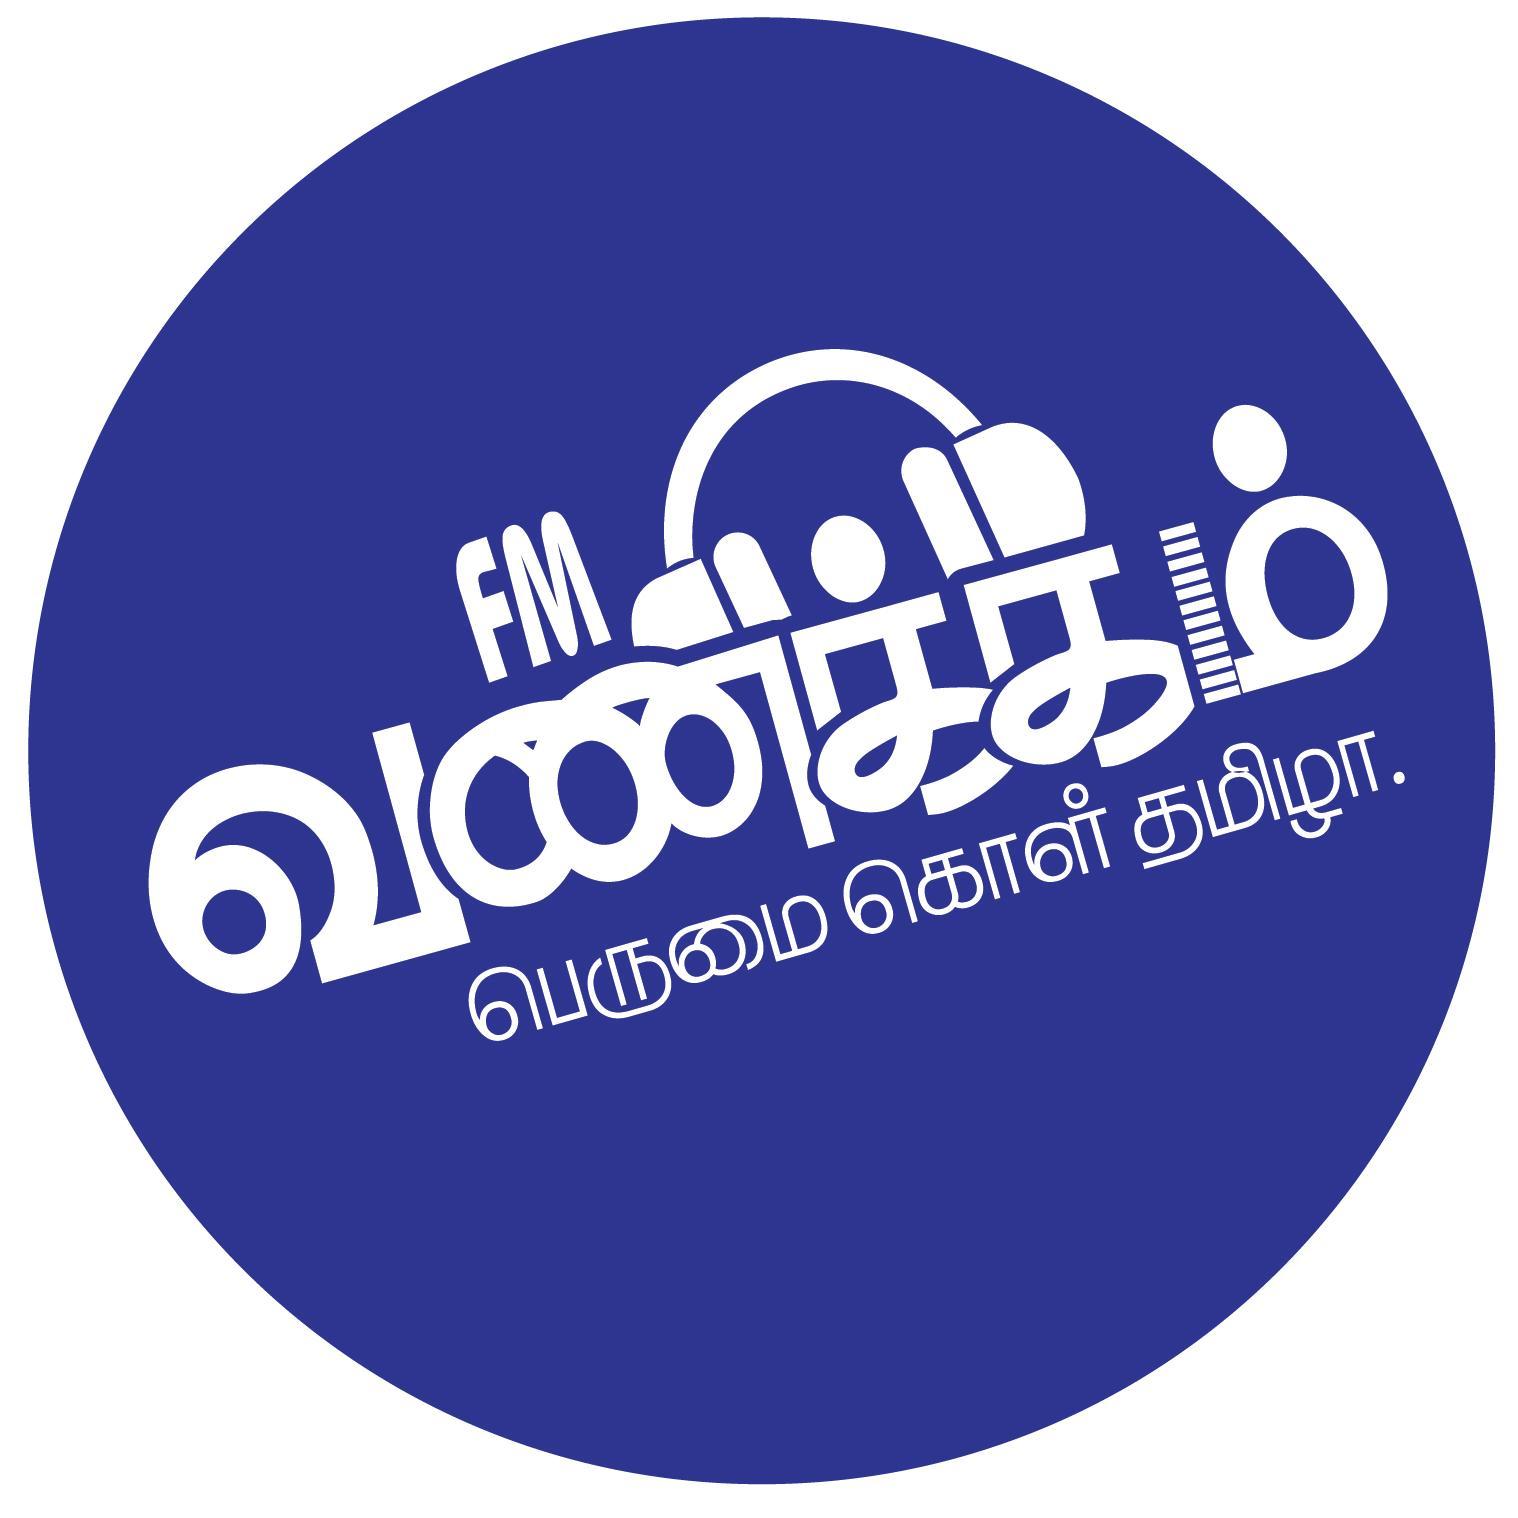 Tamil Radio Station. http://t.co/eu6V8iQpeV